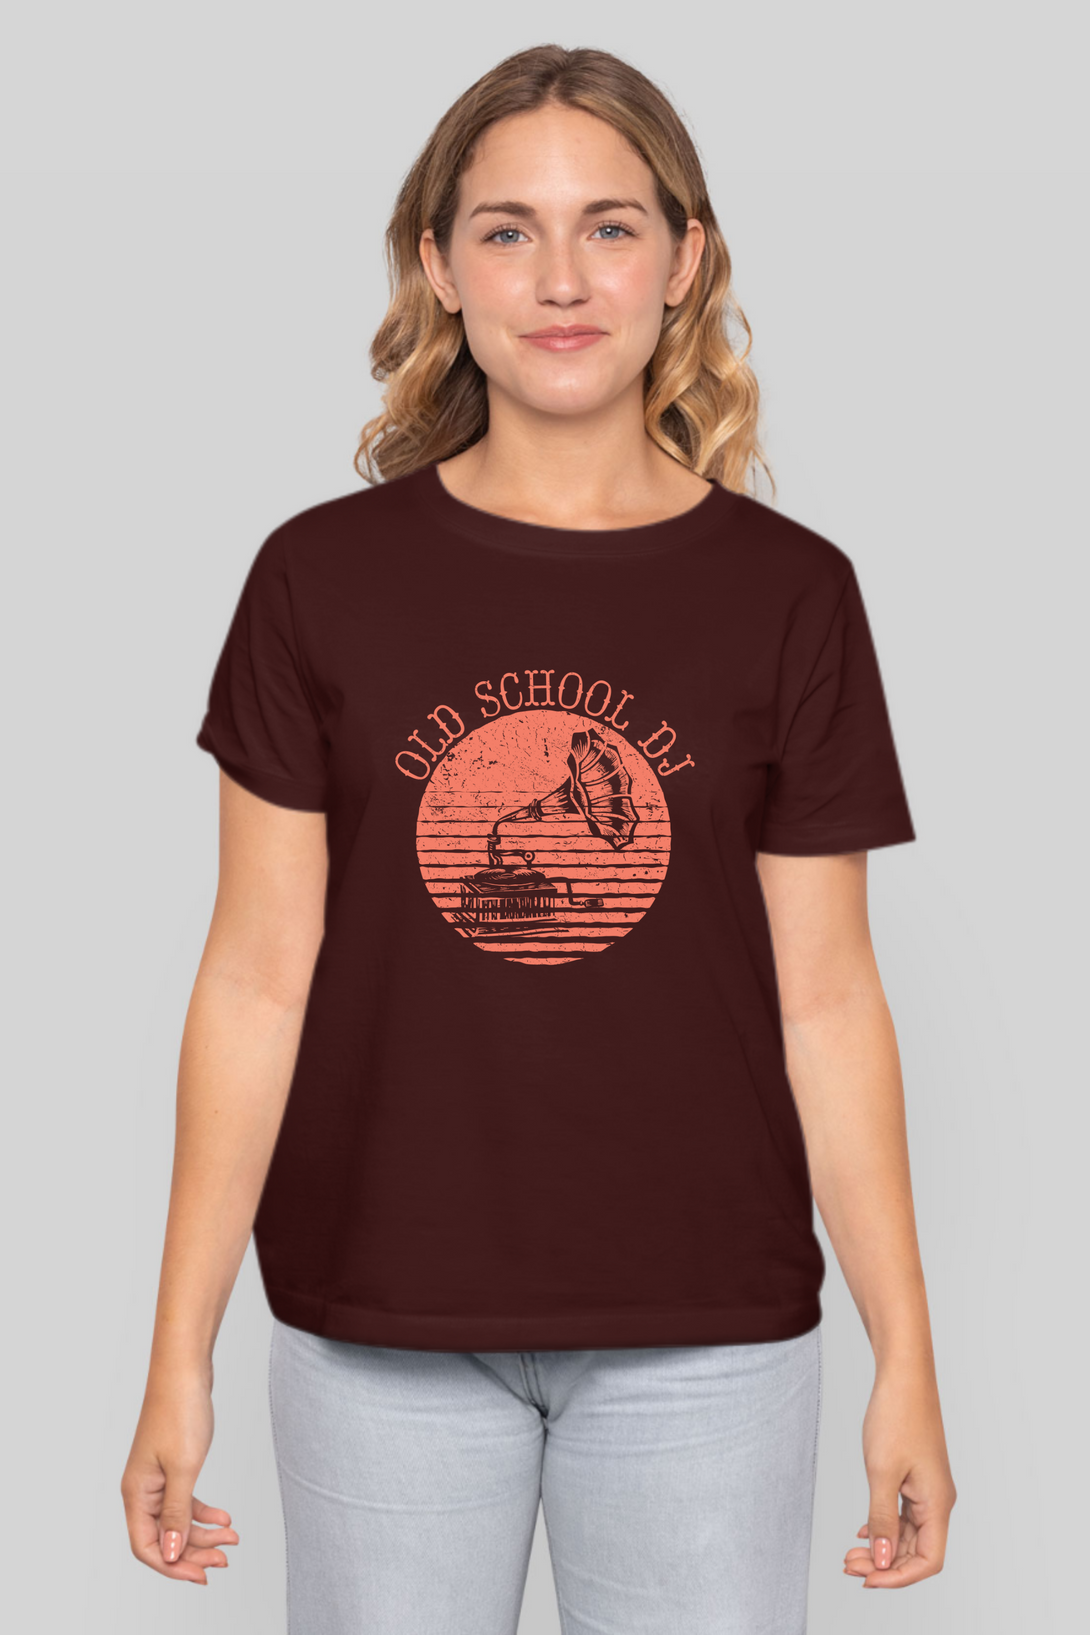 Old School Dj Printed T-Shirt For Women - WowWaves - 8